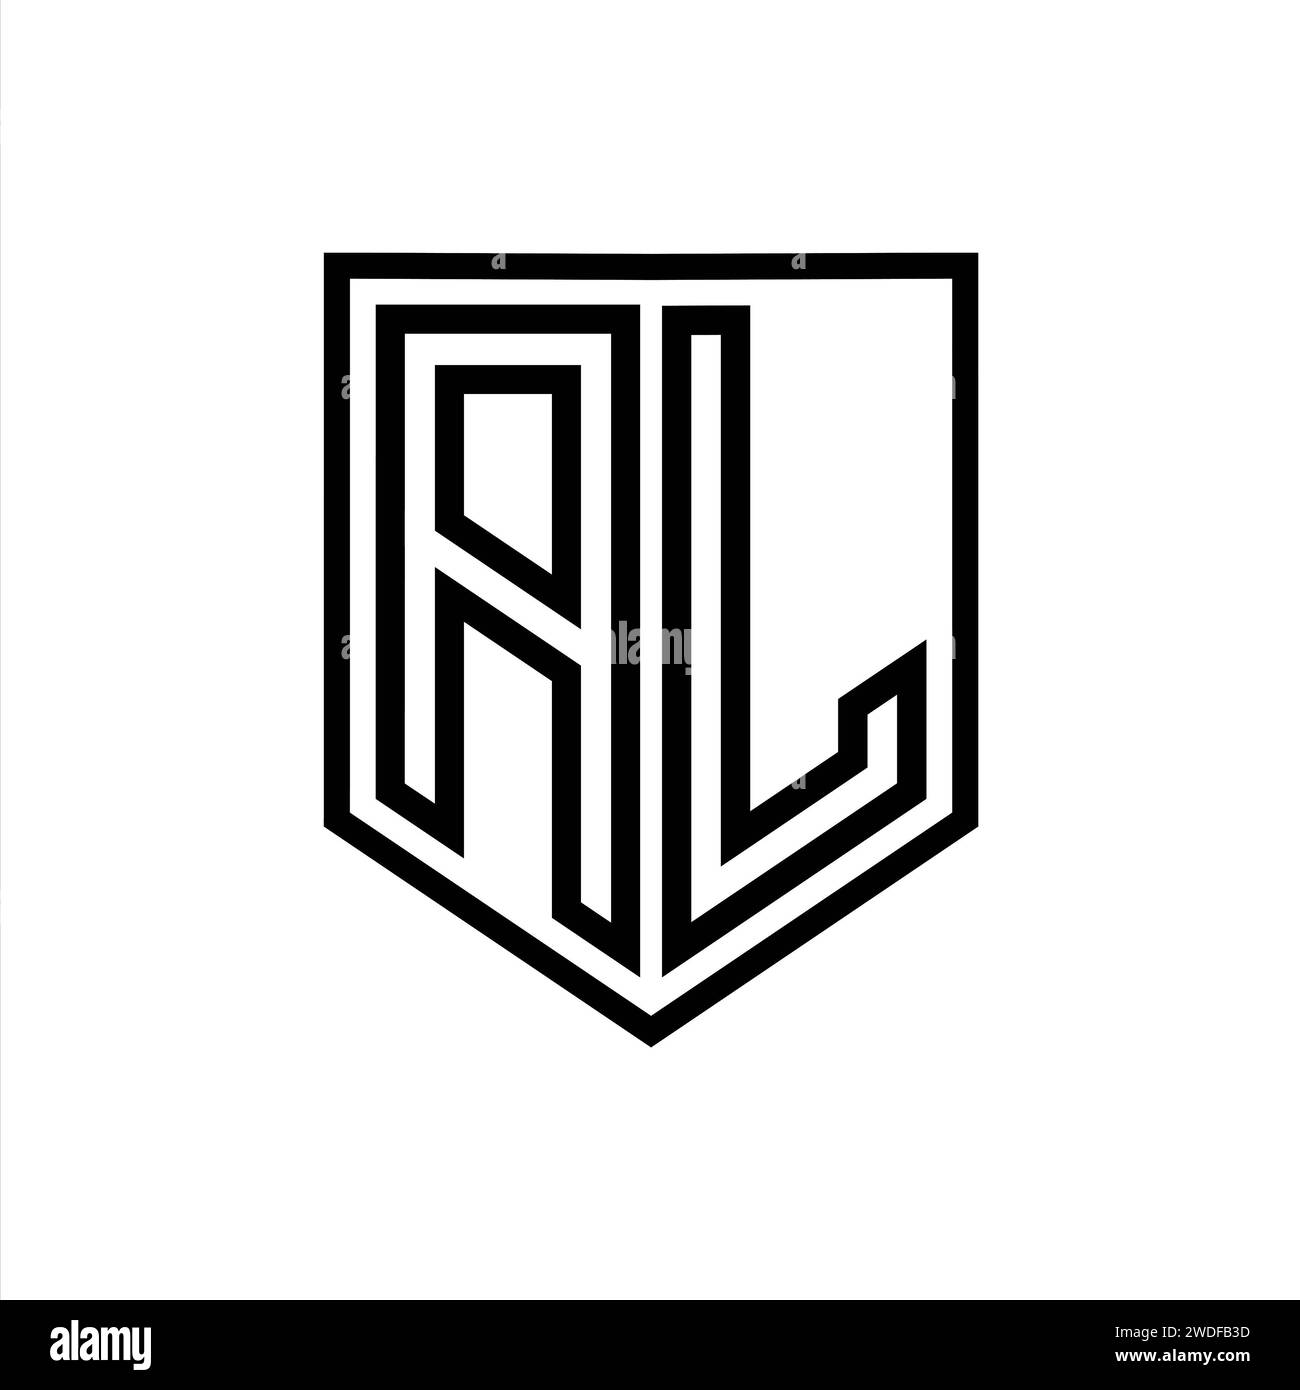 AL Letter Logo monogram shield geometric line inside shield isolated style design template Stock Photo